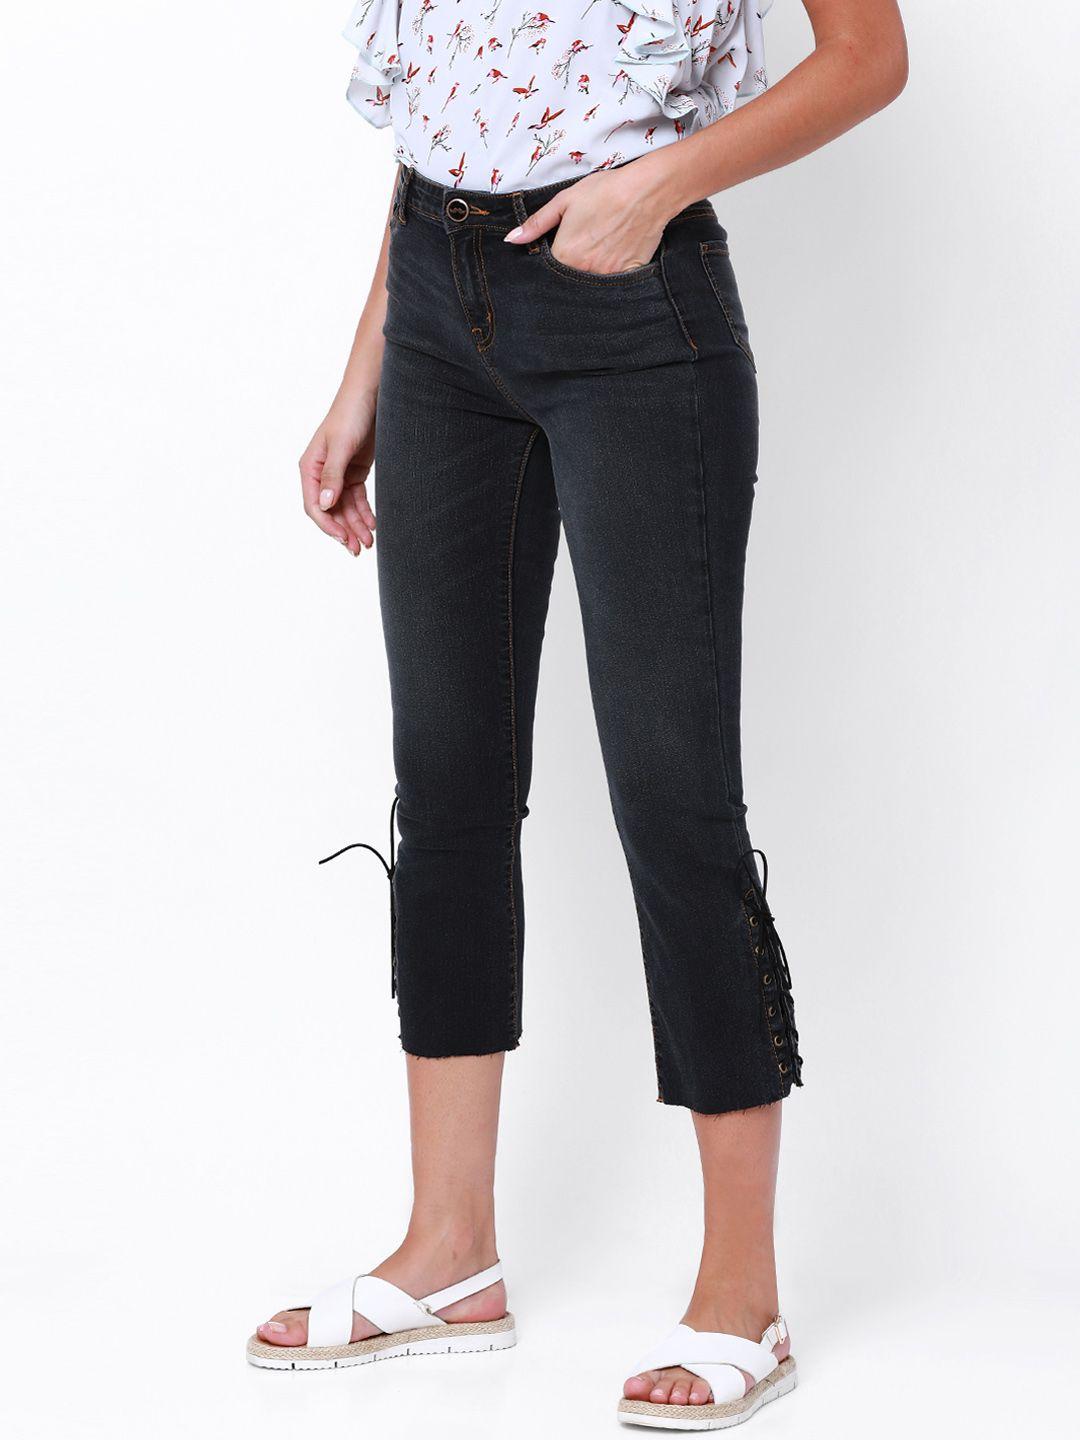 tokyo talkies women black slim fit mid-rise clean look stretchable jeans